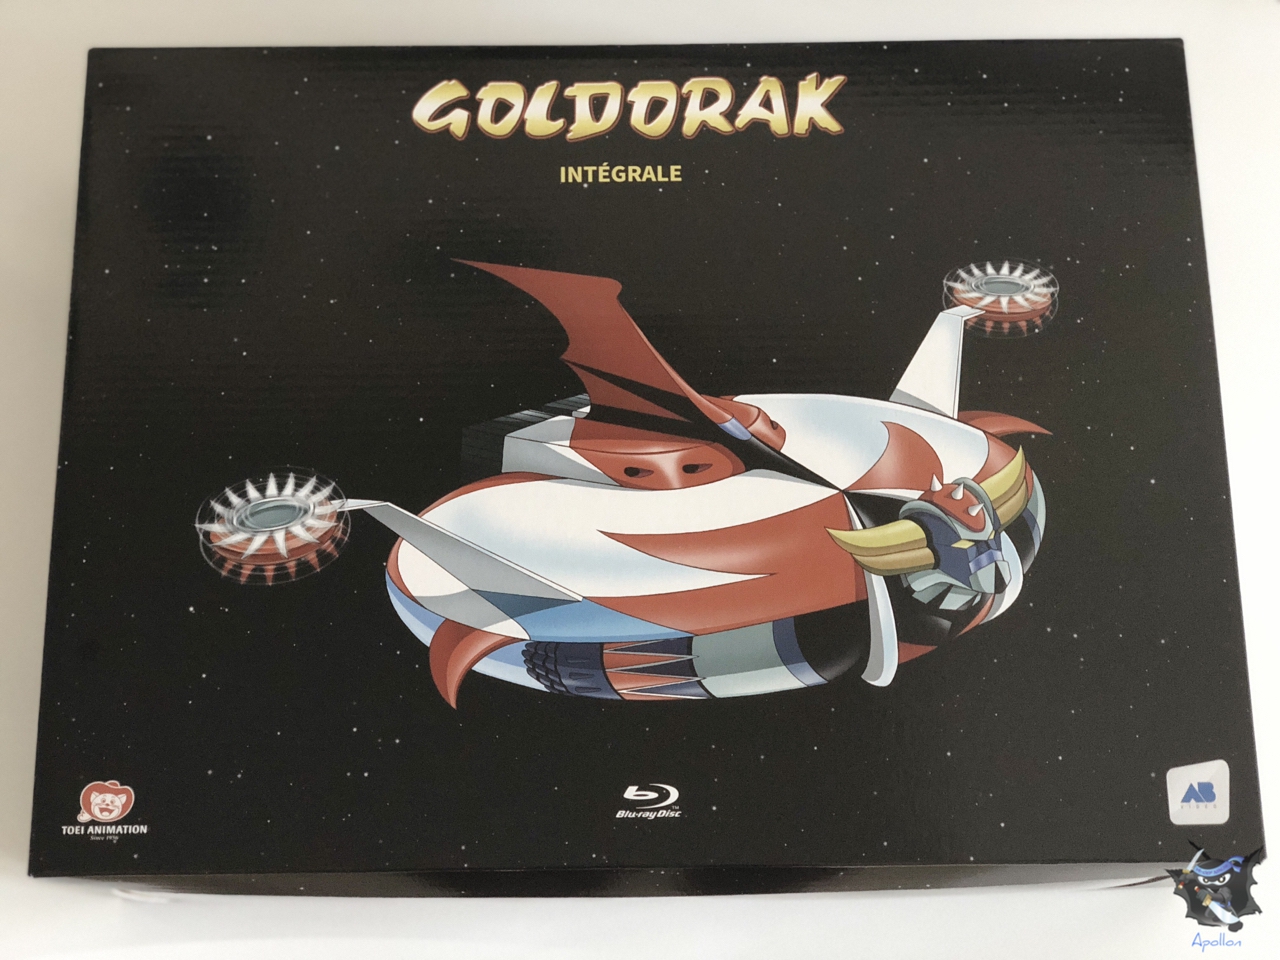 GOLDORAK L'intégrale Coffret Blu-ray Edition Collector Limitée